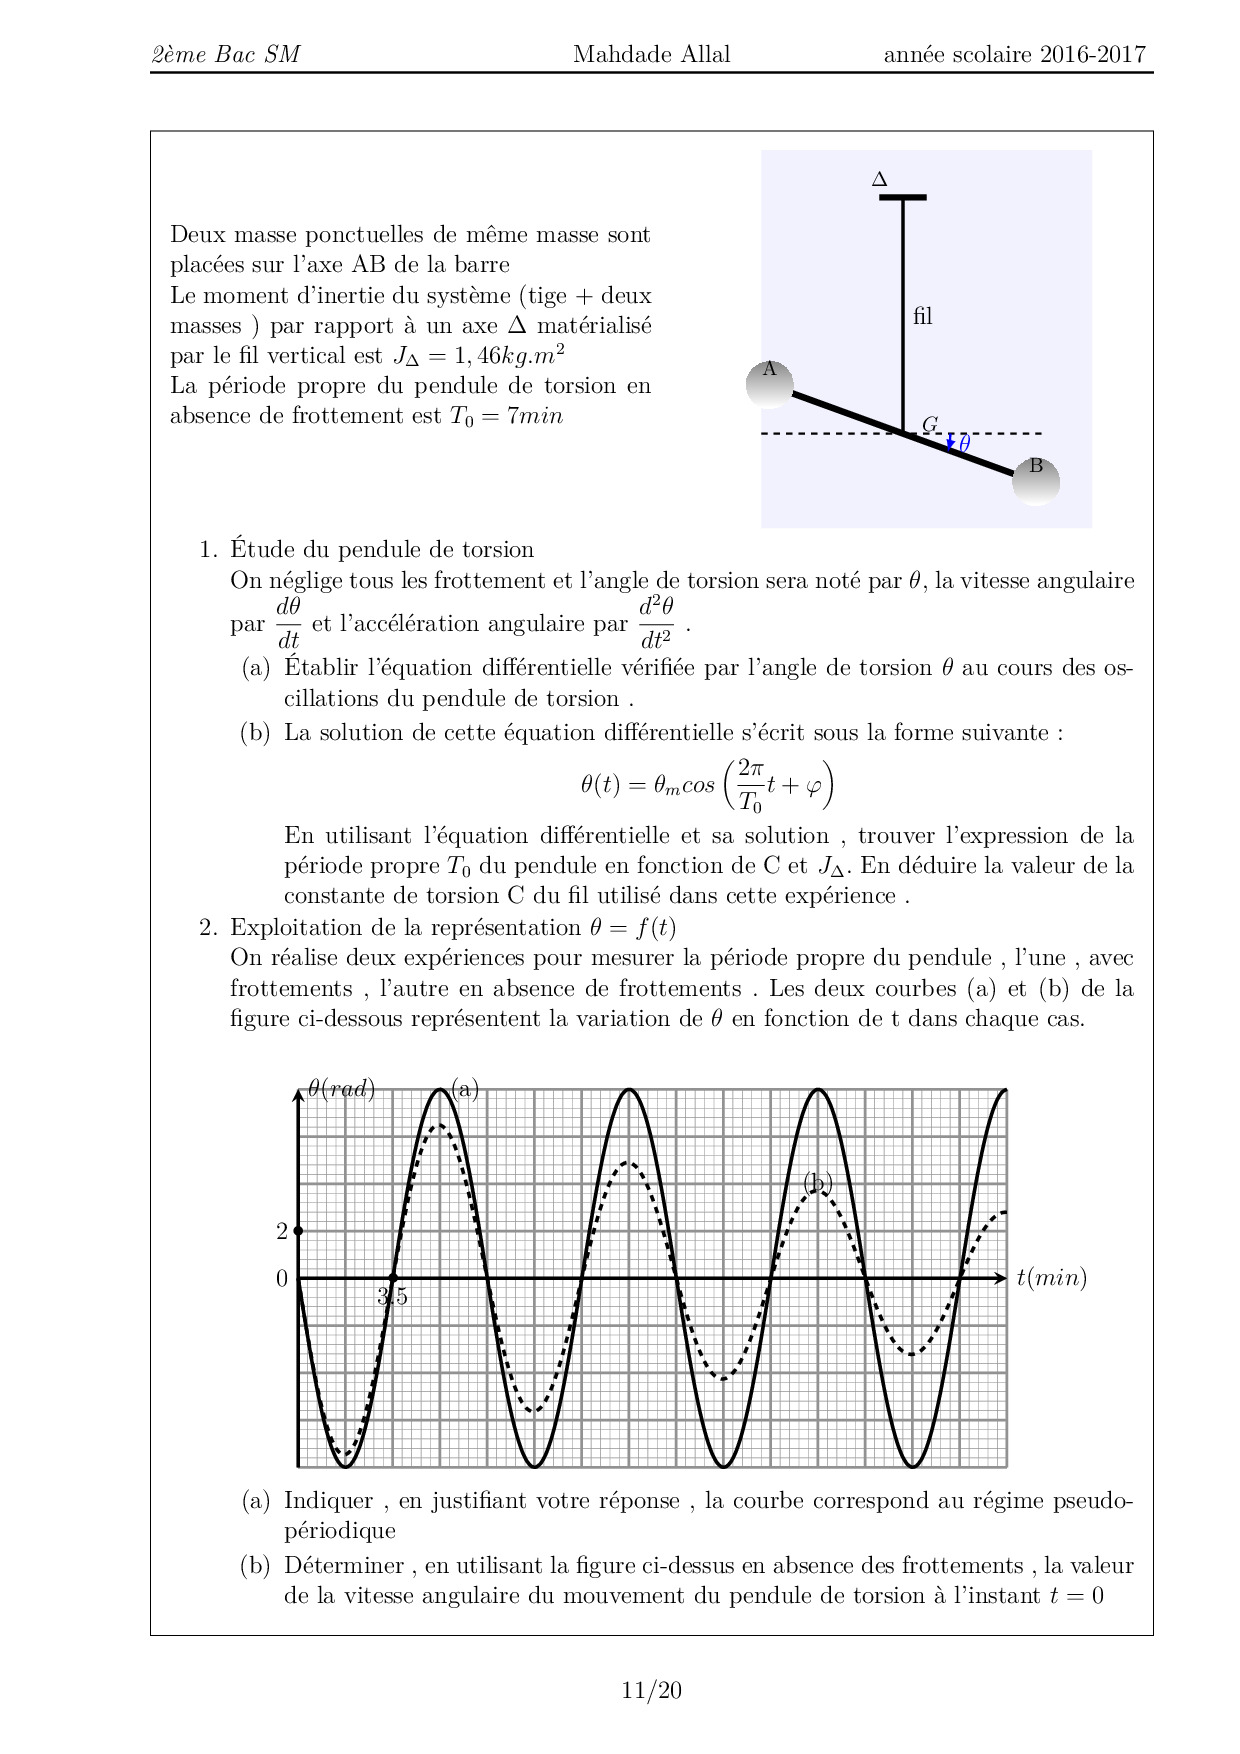 Mécanique analytique, exercice 4 double pendule, 6 